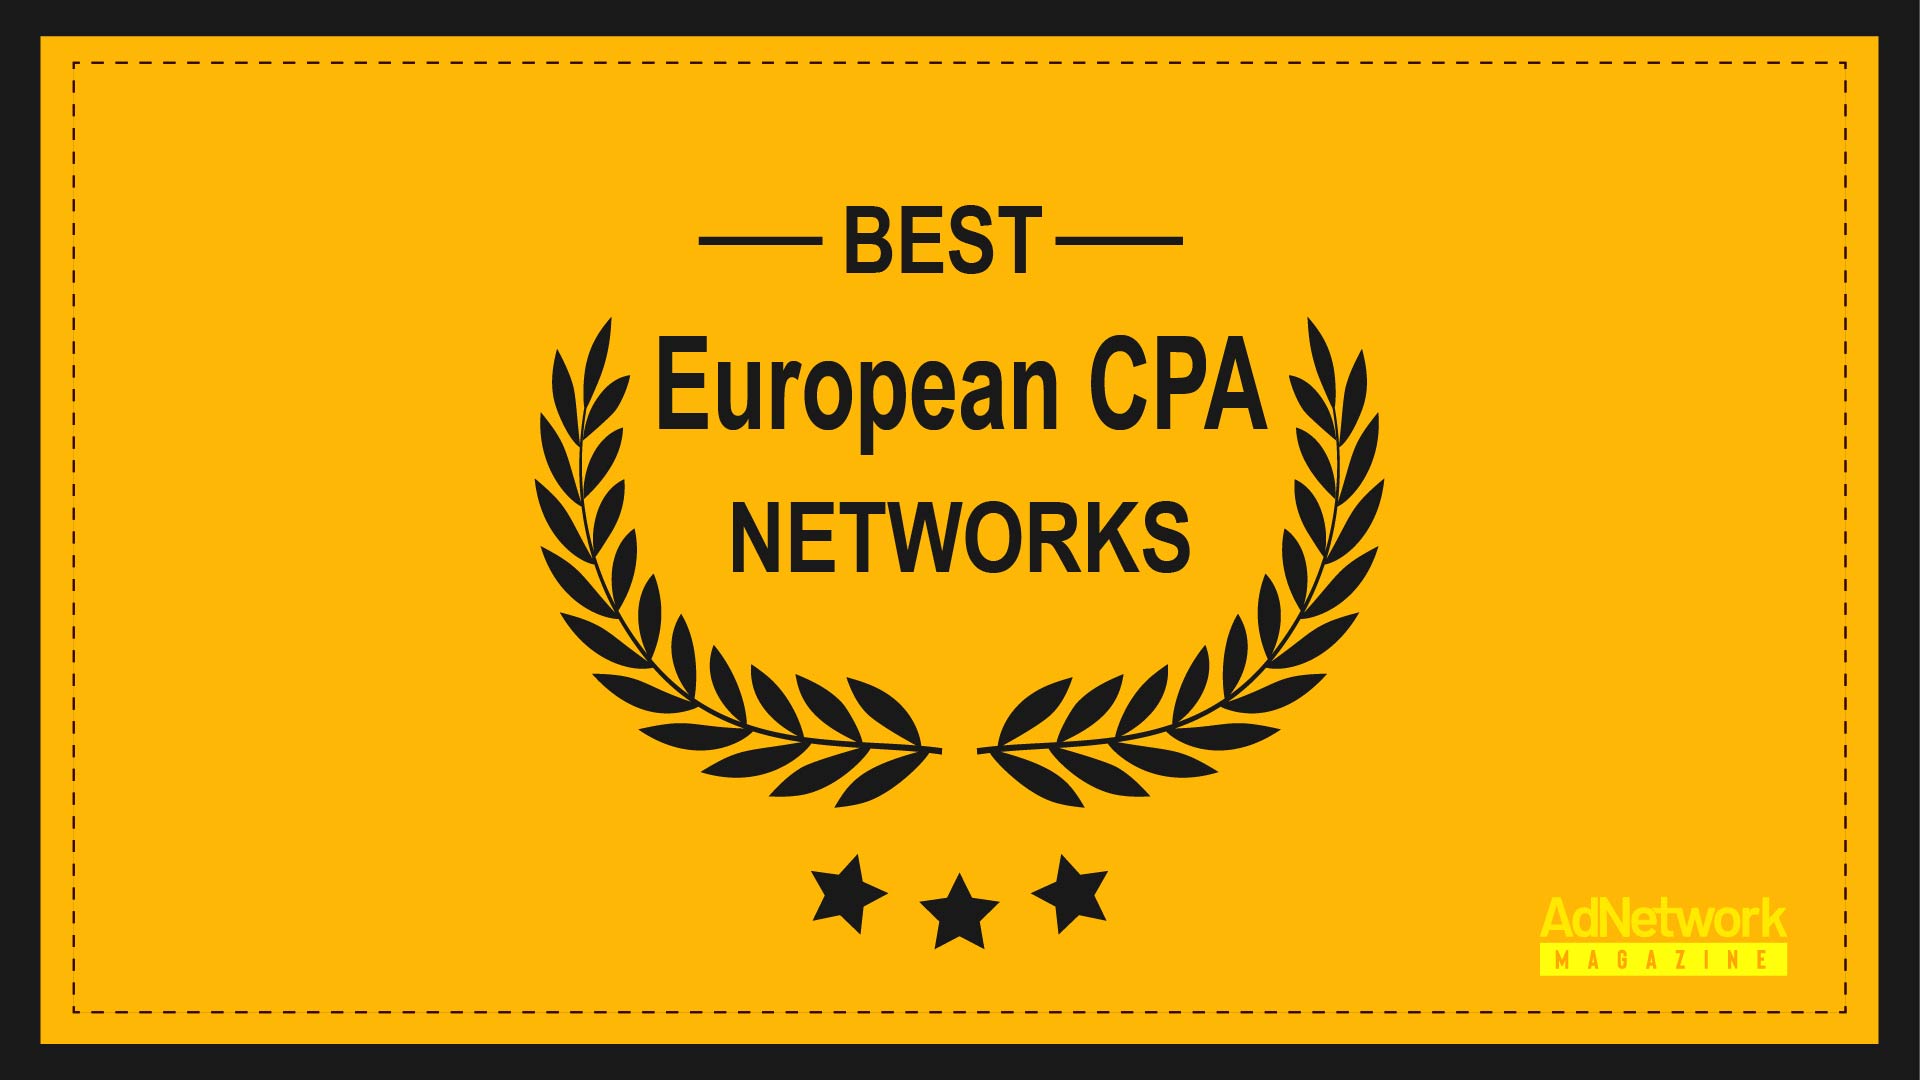 Best European CPA Networks